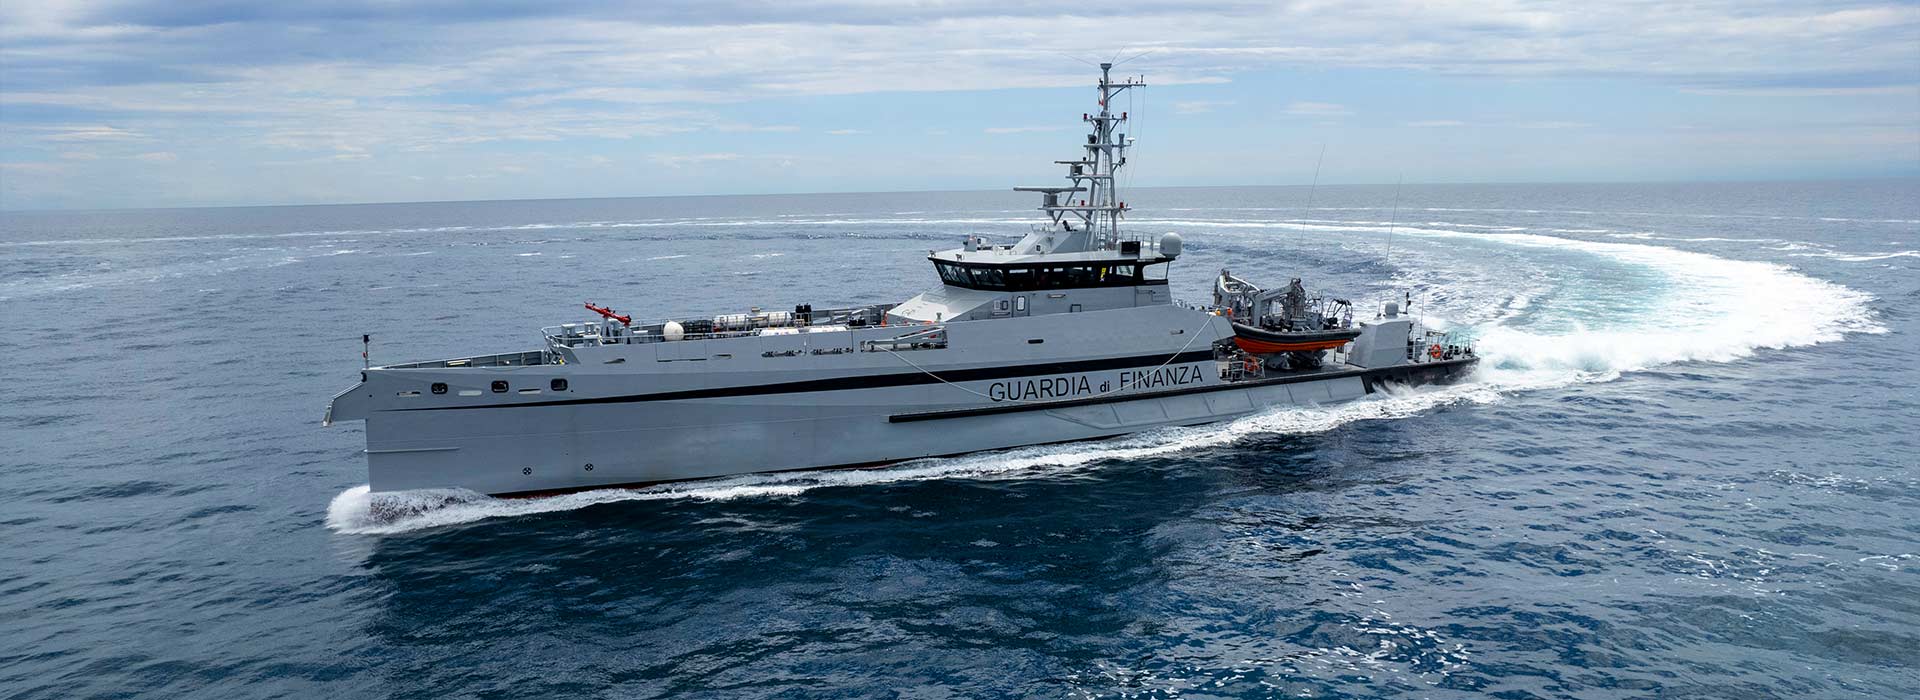 OPV606, Offshore Patrol Vessel, Cantiere Navale Vittoria